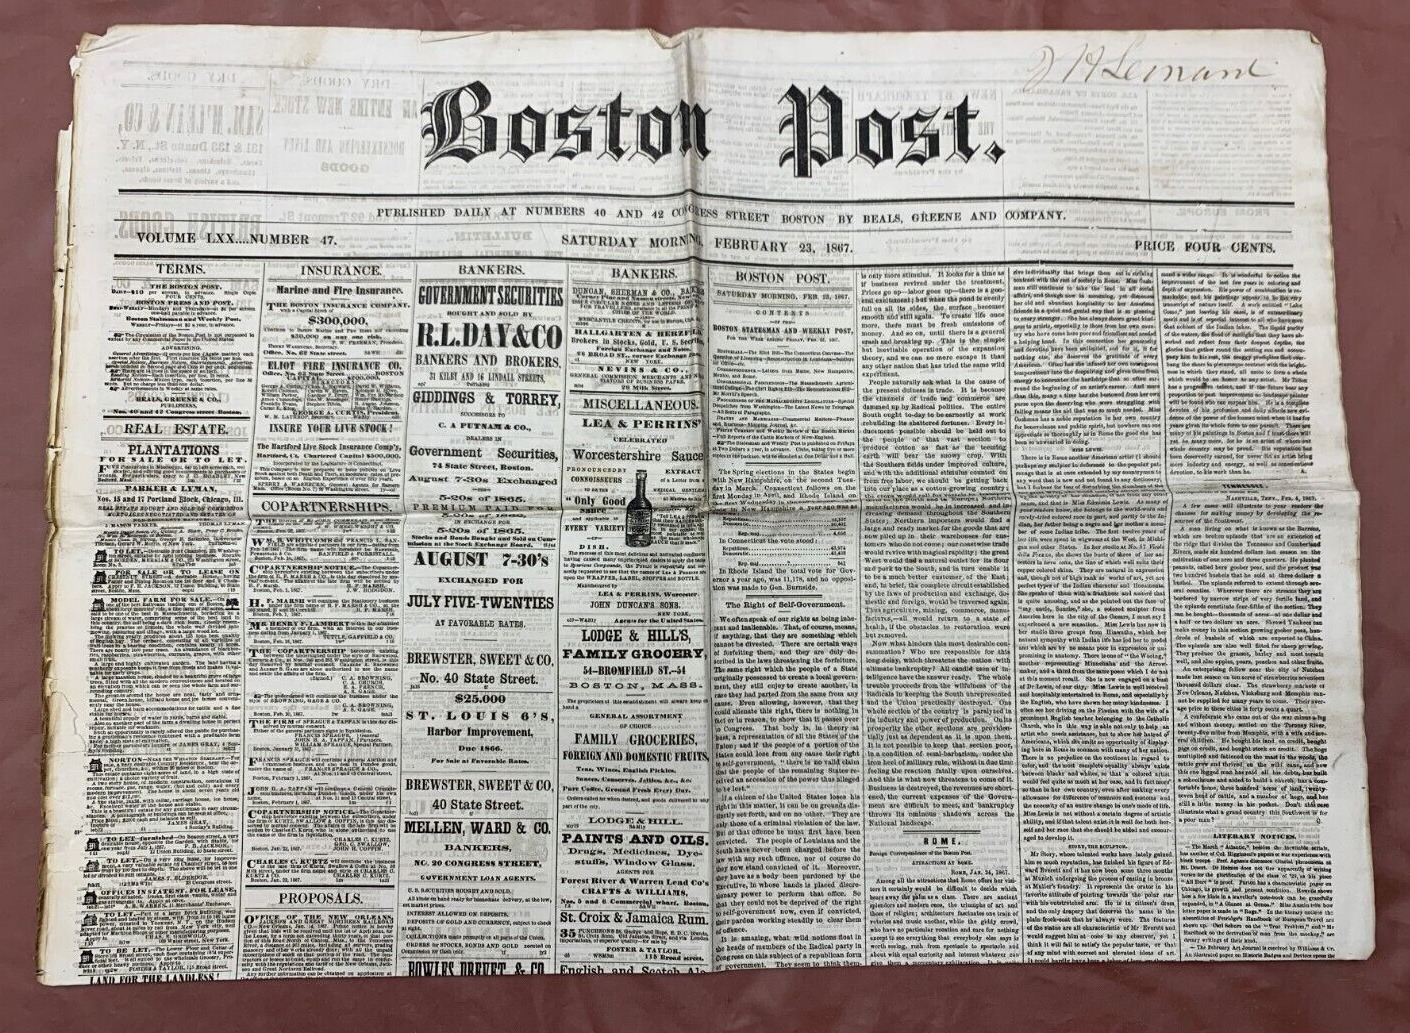 Antique Boston Post Newspaper February 23, 1867 Volume LXX.... Number 47